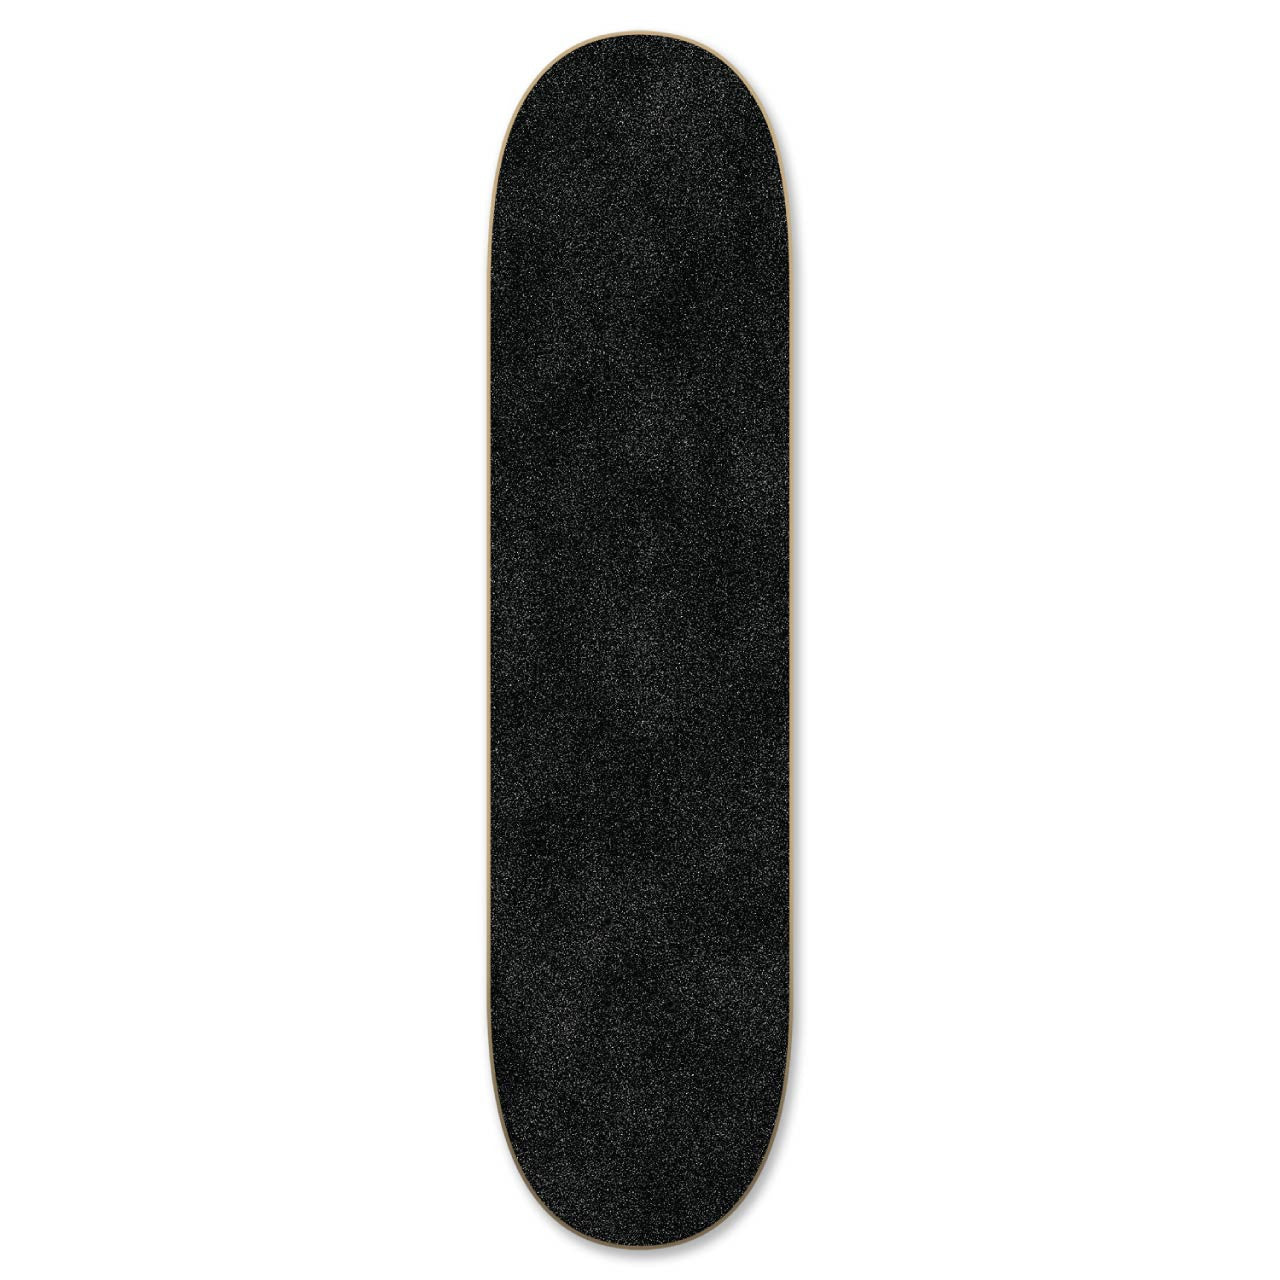 Graphic Hot Rod Pyro Skateboard Deck